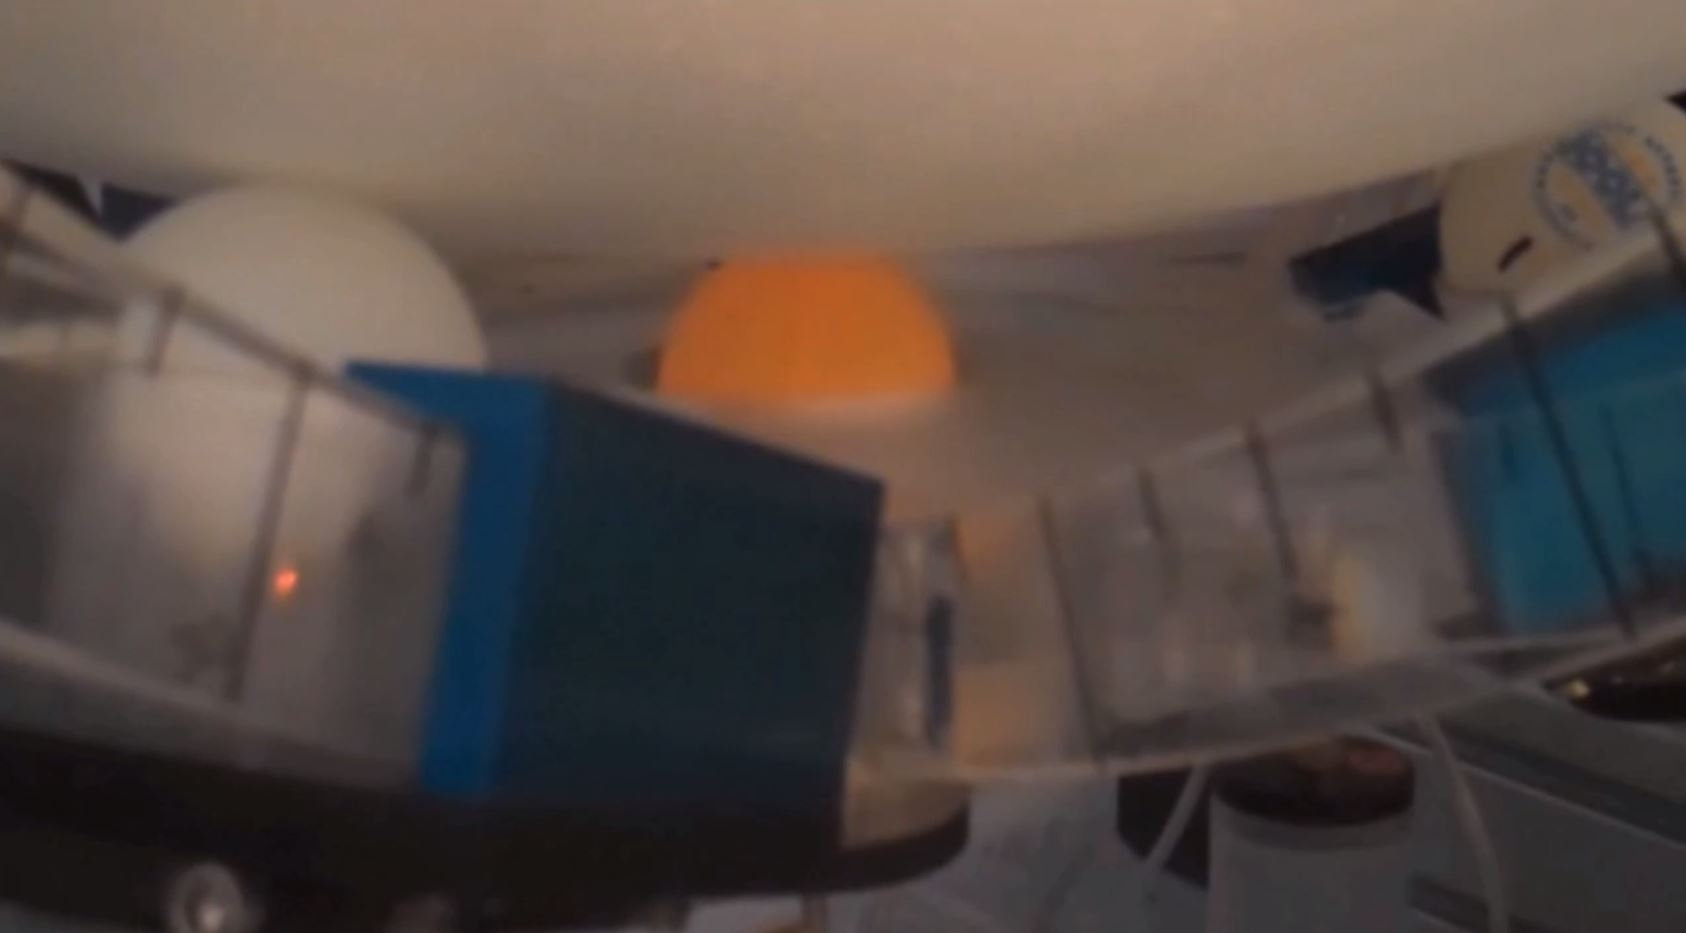 Large Spherical Treadmill Video Capture